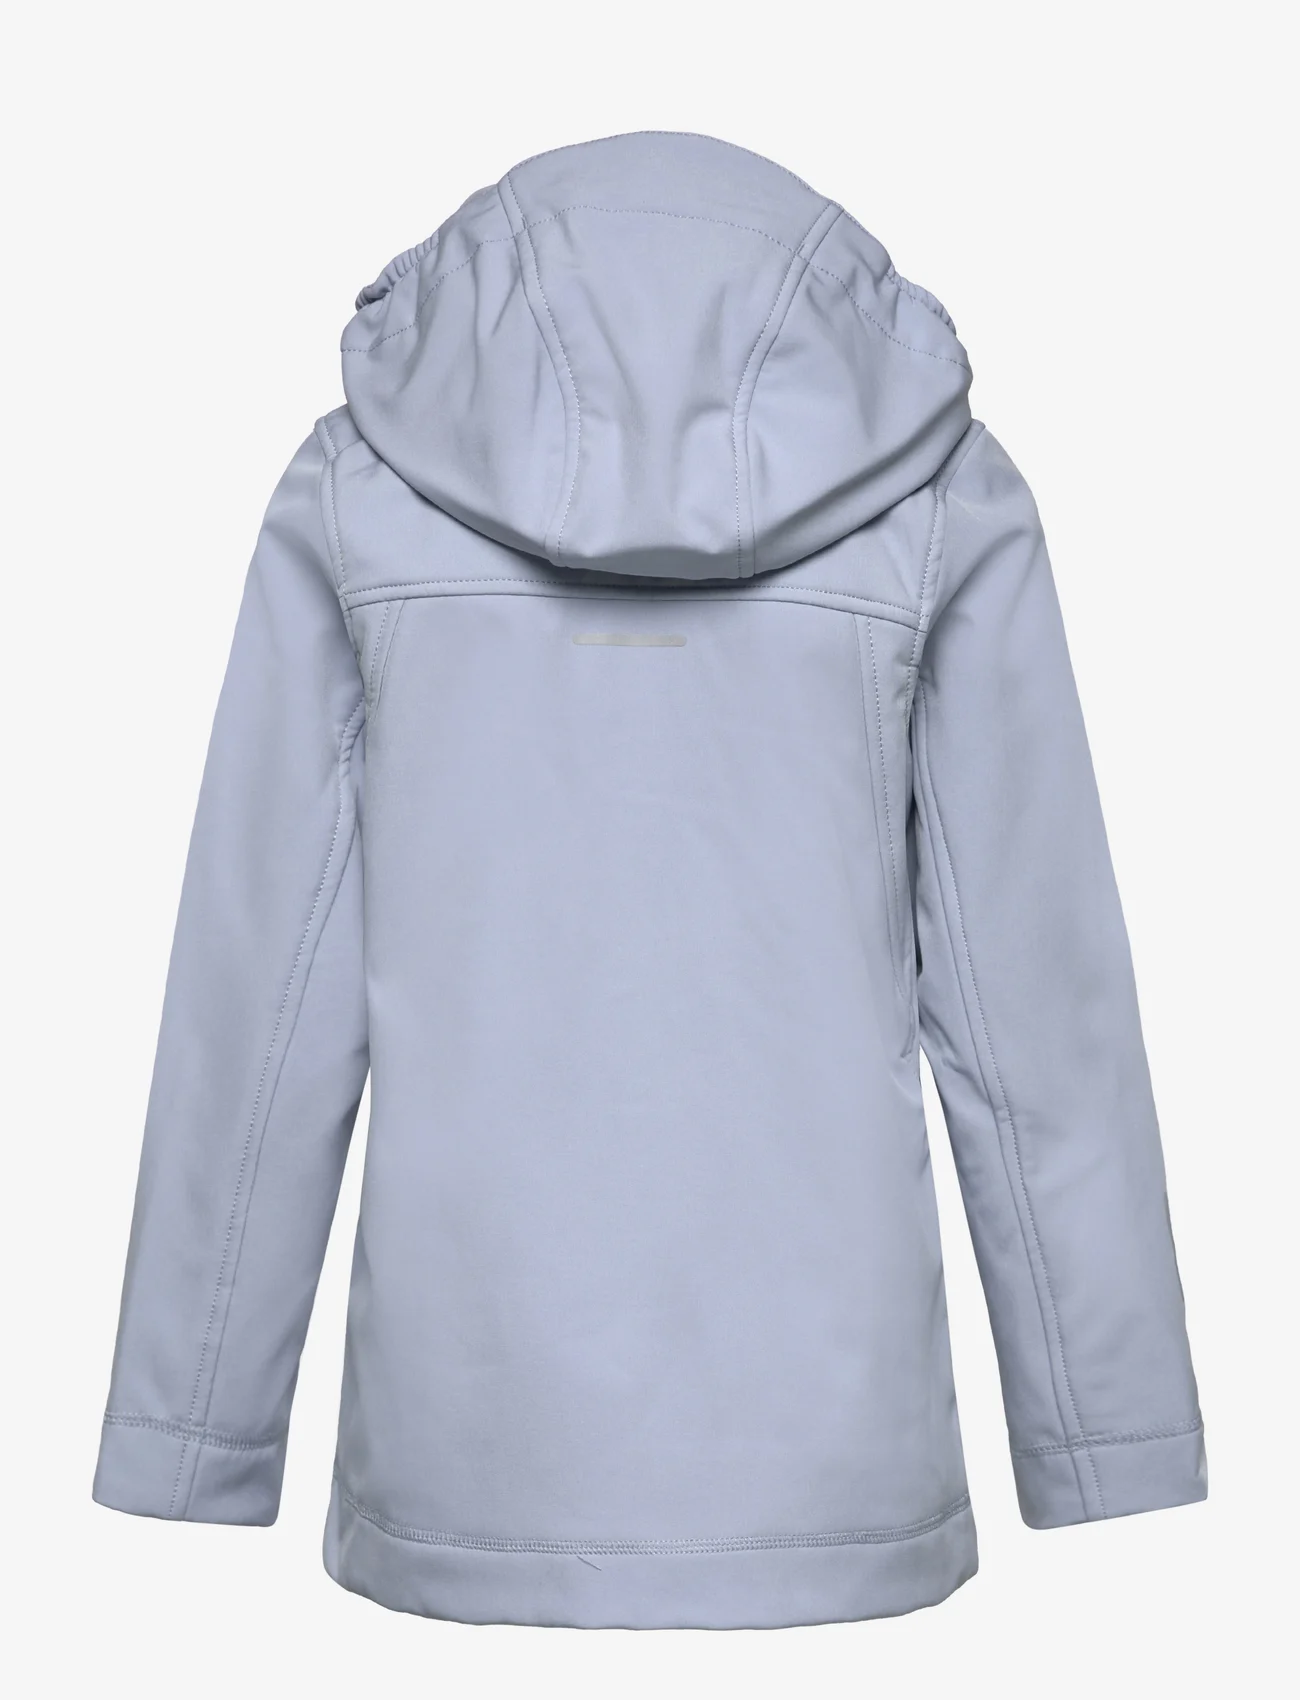 Reima - Softshell jacket, Espoo - lapsed - foggy blue - 1